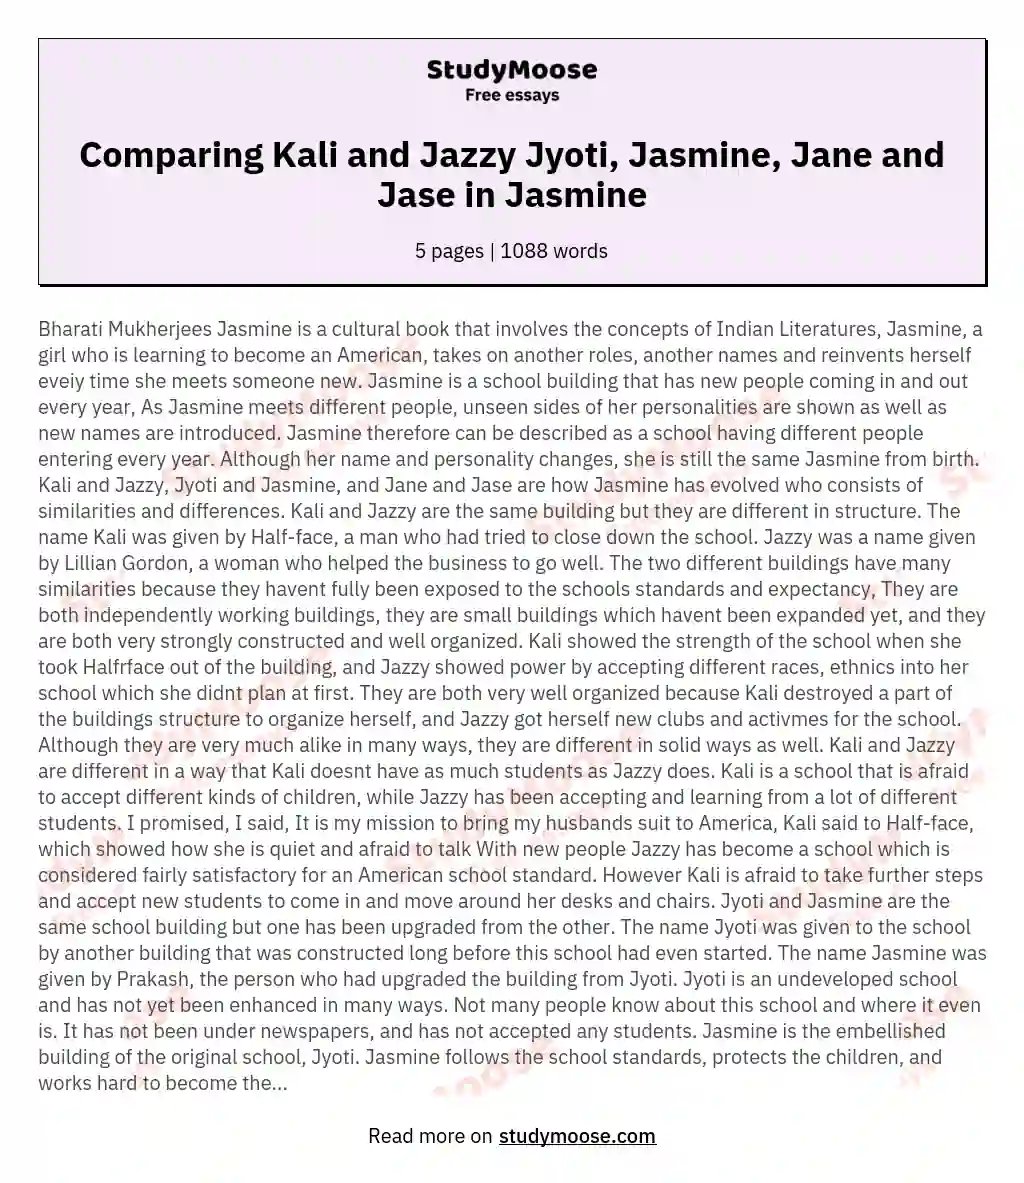 Comparing Kali and Jazzy Jyoti, Jasmine, Jane and Jase in Jasmine essay